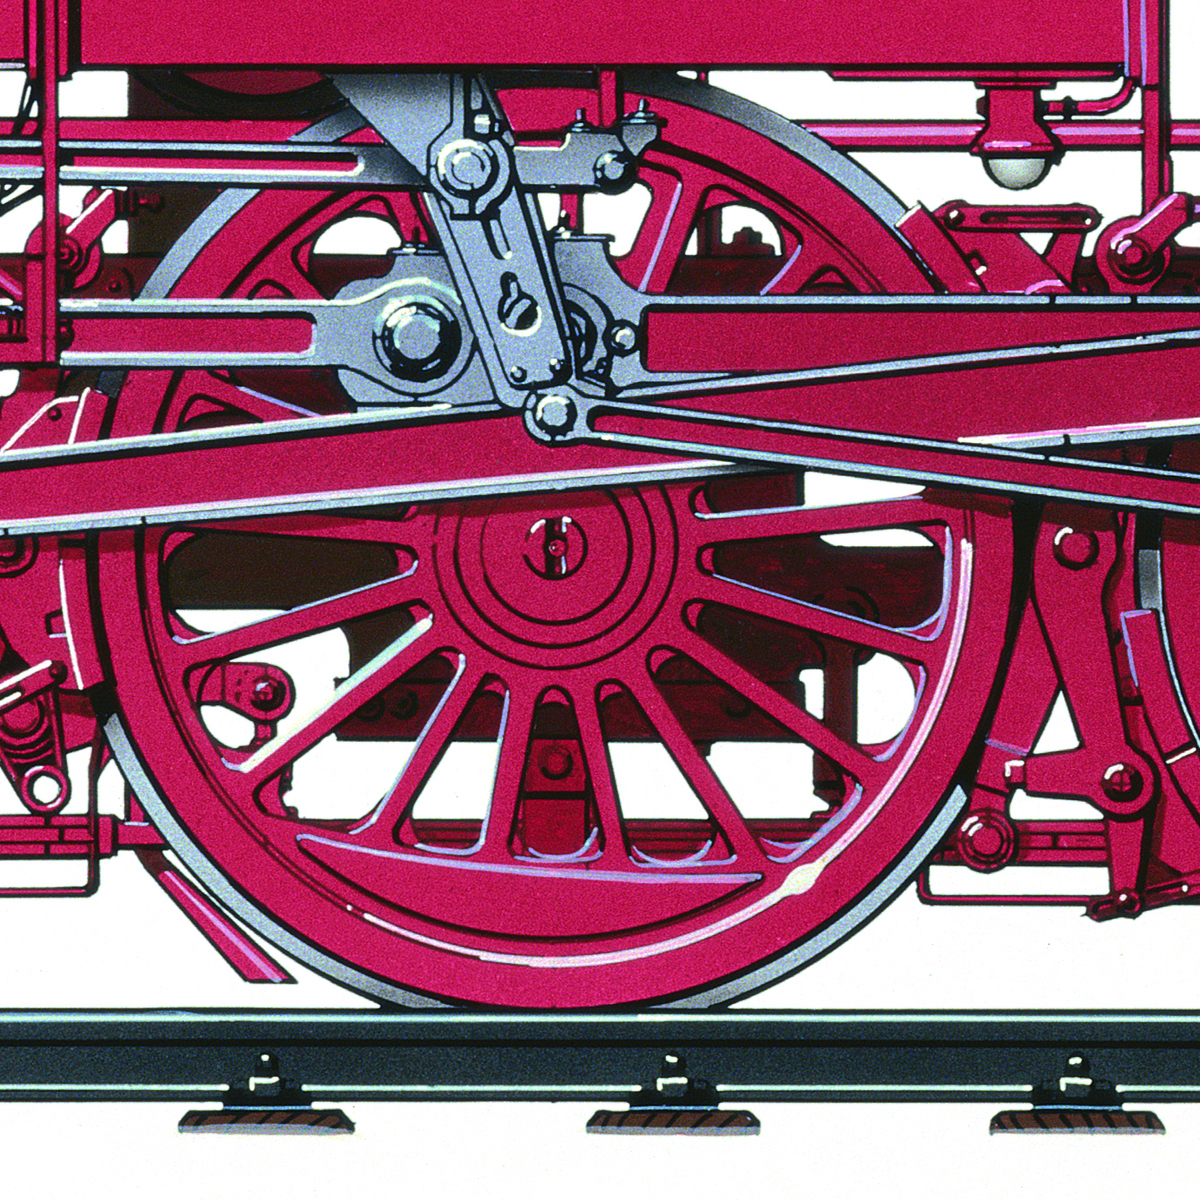 Malerei Kunst kaufen – Gemälde – Dampflokomotive "41018", Digitaldruck auf Leinwand, Airbrushillustration